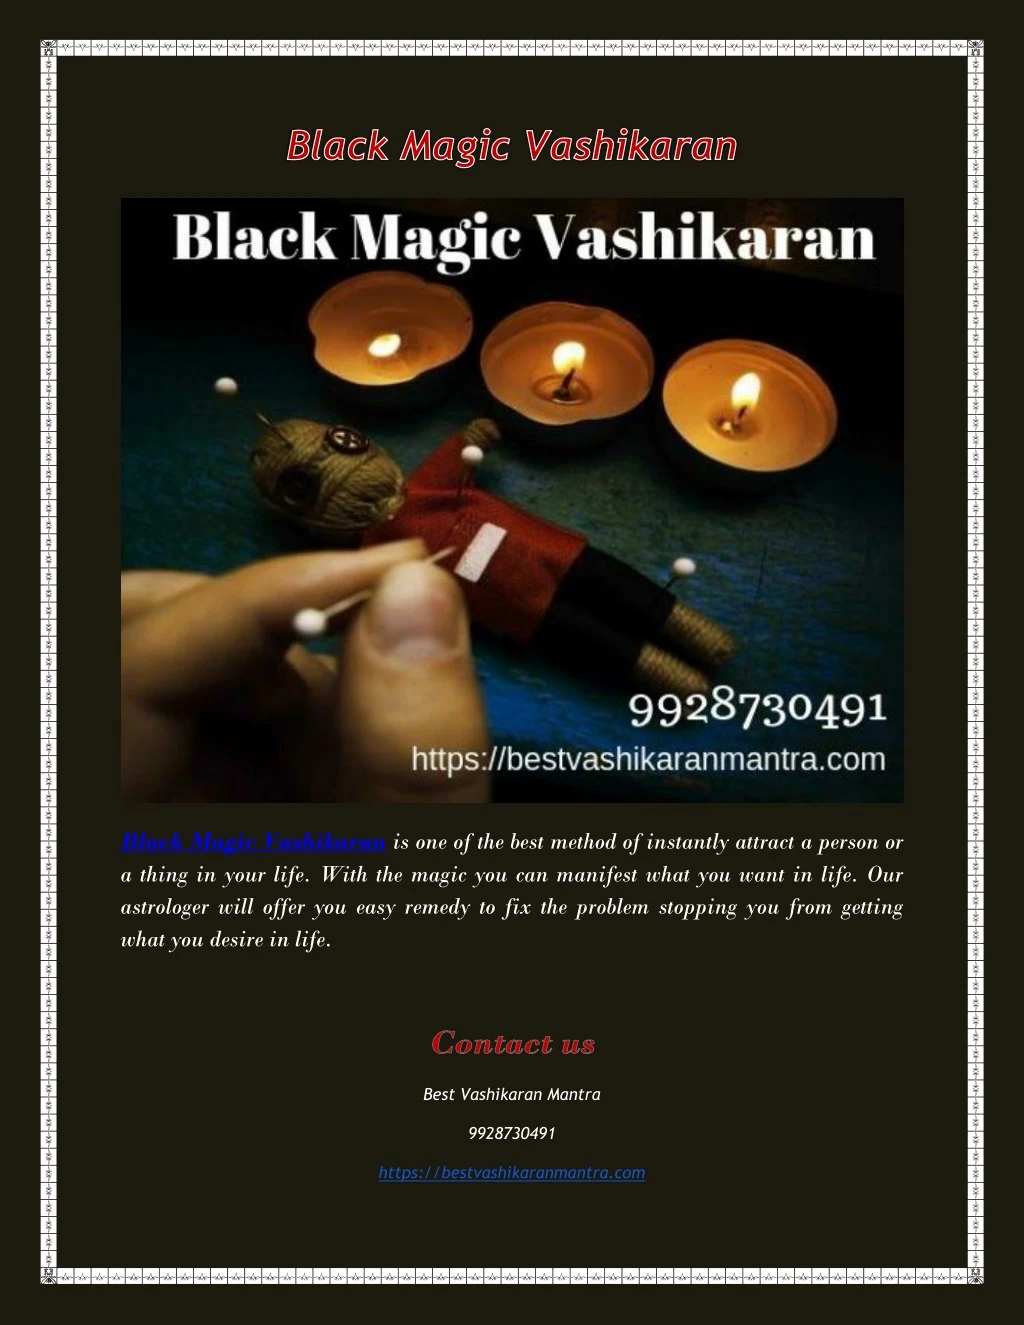 black magic vashikaran is one of the best method